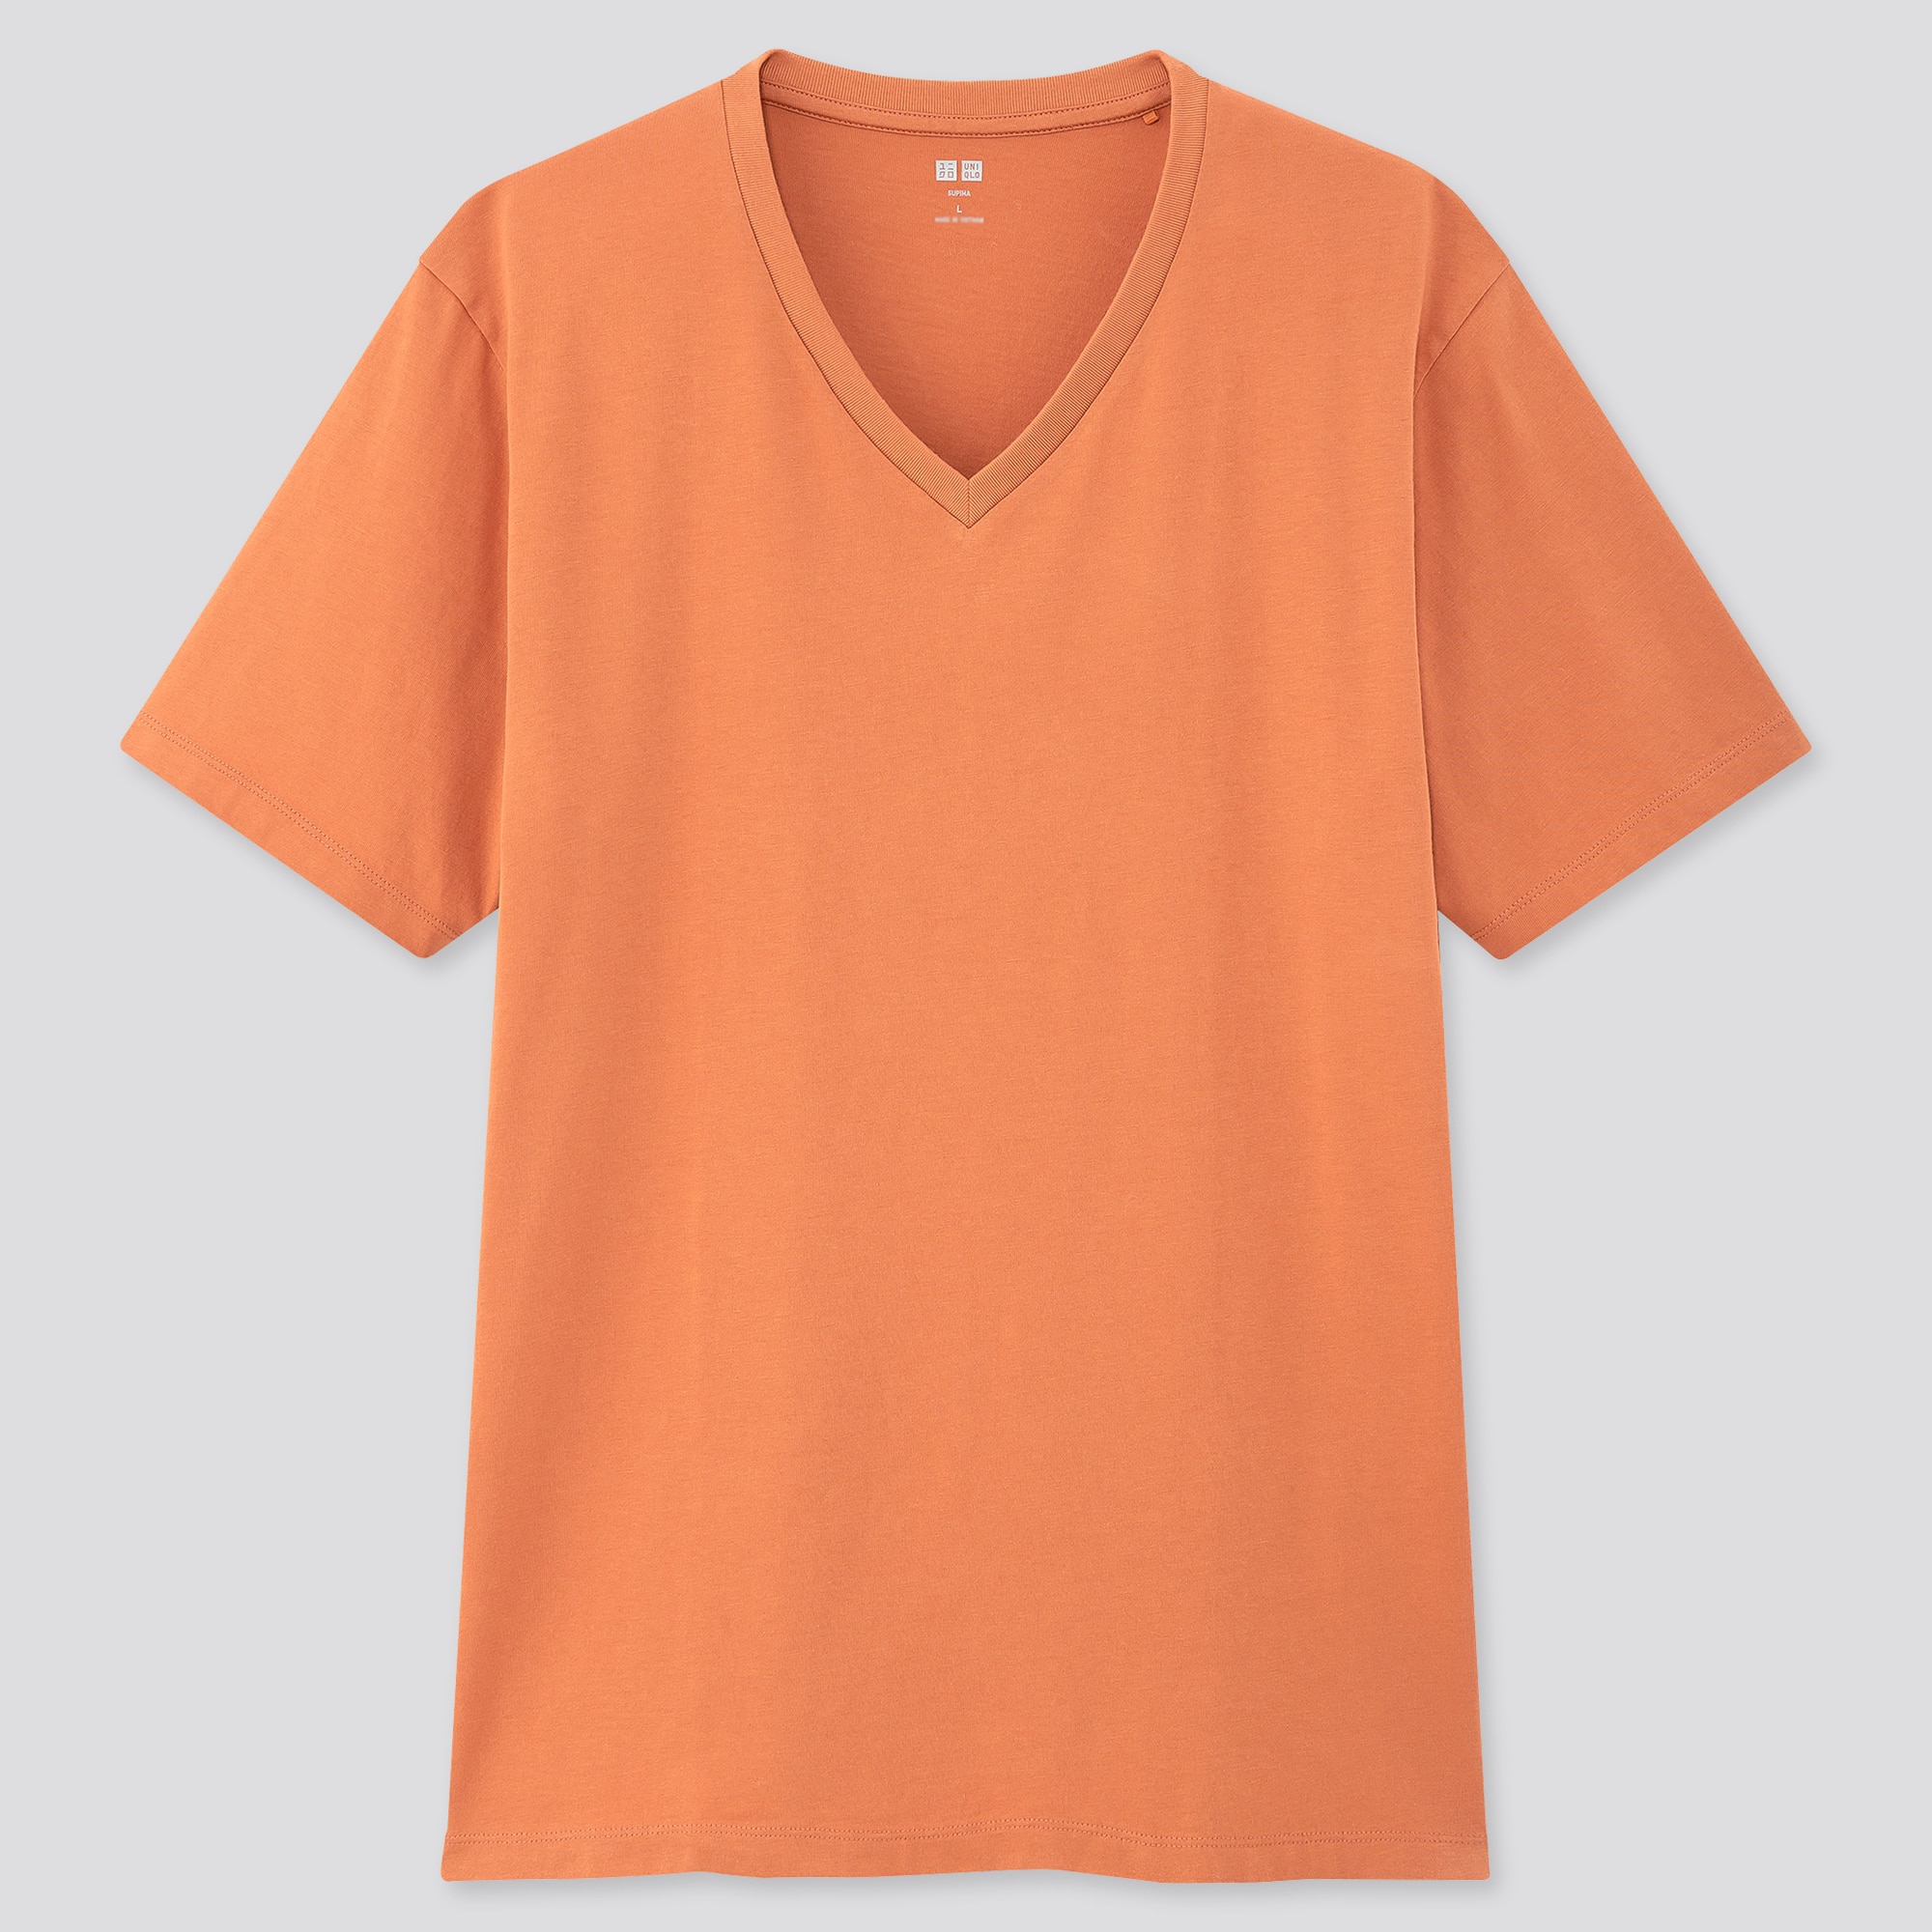 orange v neck t shirt mens